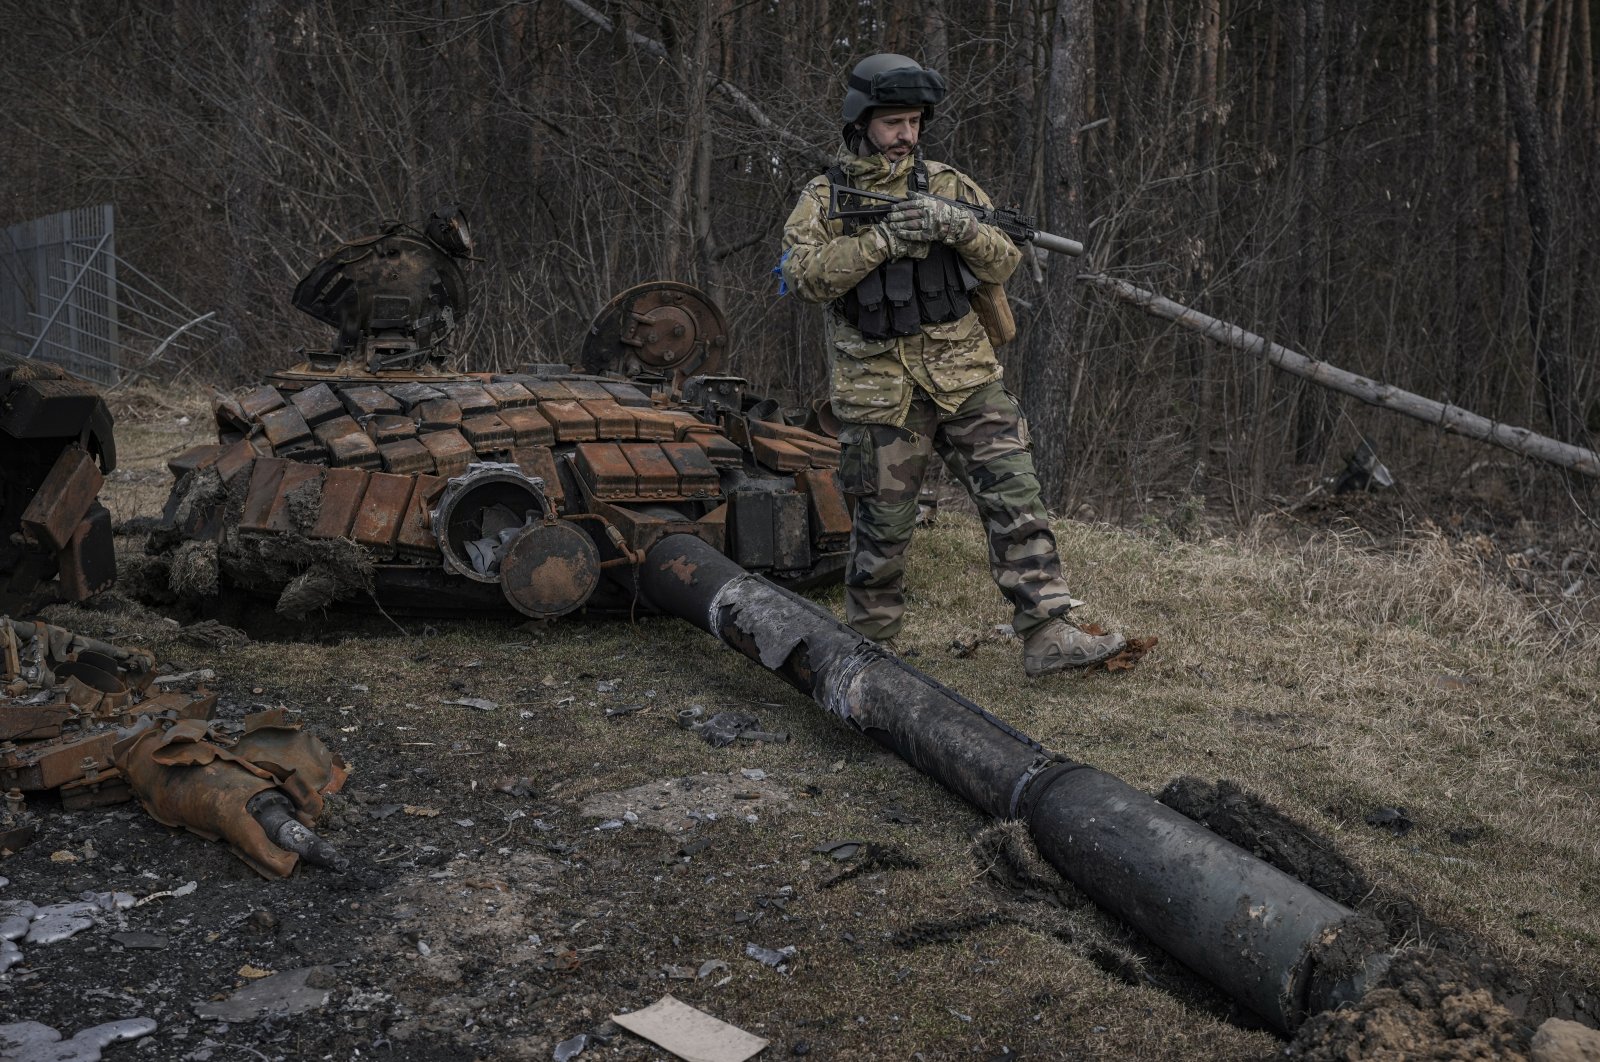 A Ukrainian service member walks next to the wreck of a Russian tank in Stoyanka, Ukraine, March 27, 2022. (AP Photo)